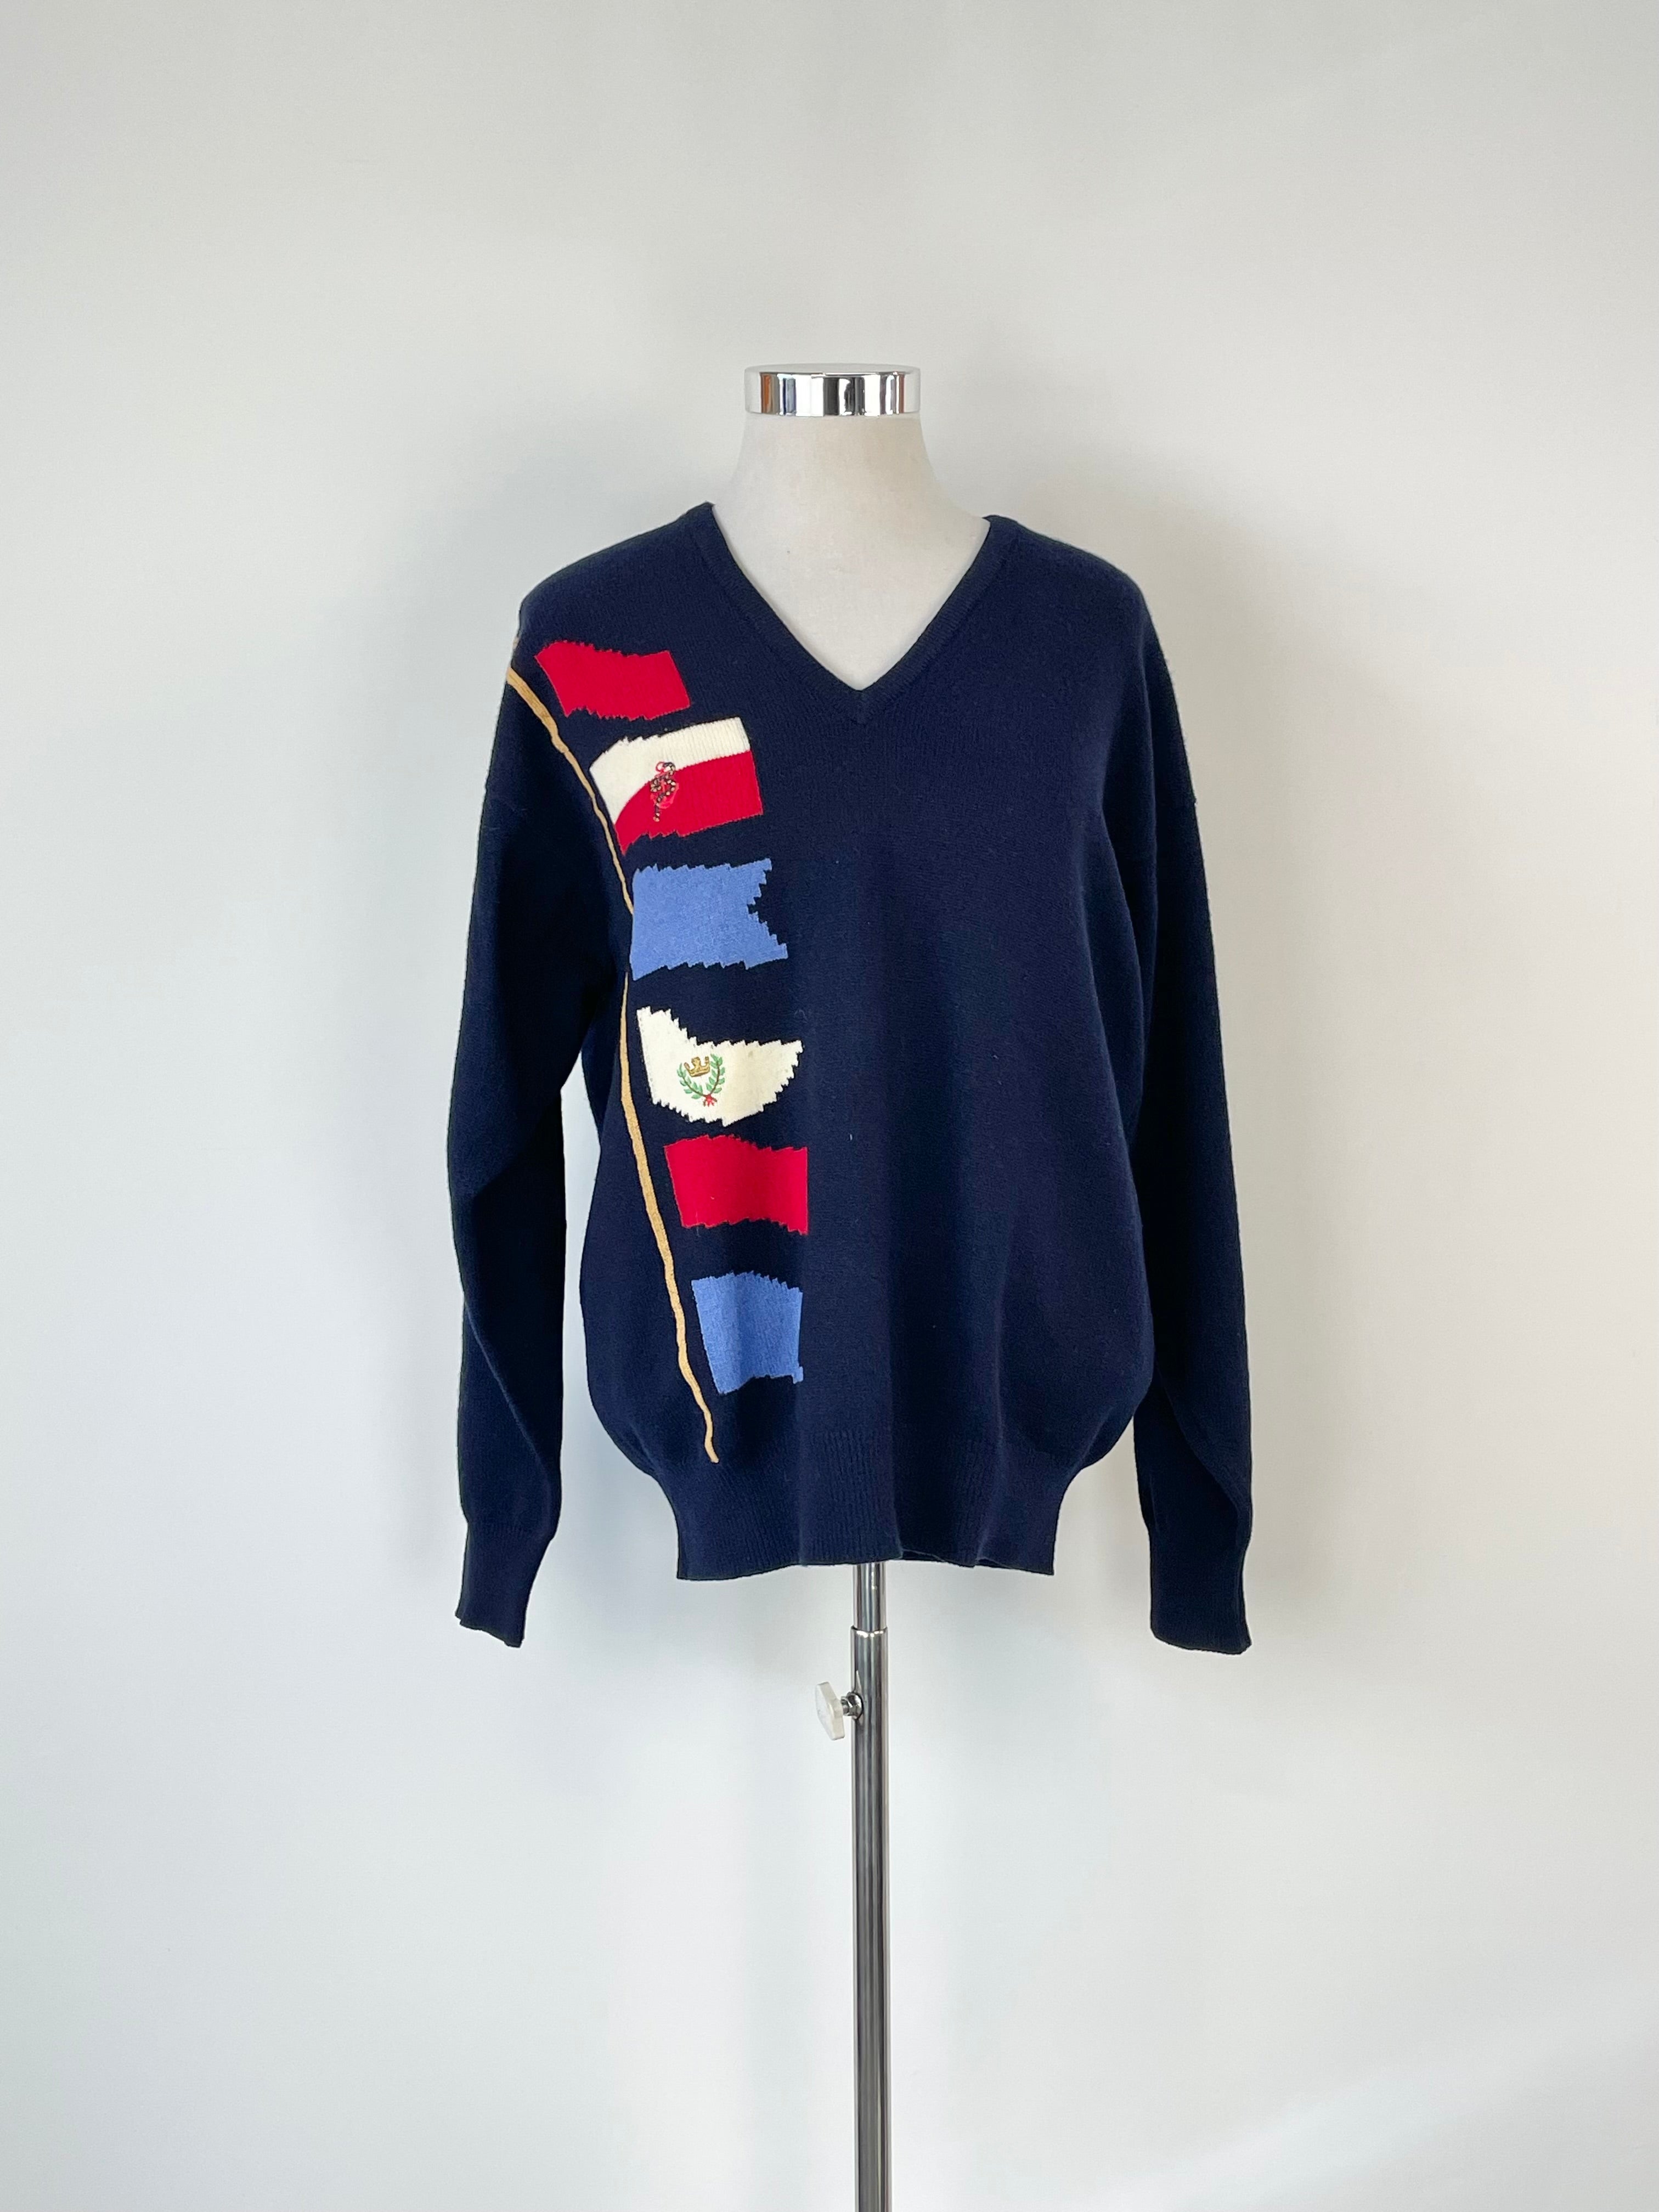 Pringle of Scotland Navy Blue Lambswool Knit Sweater - M